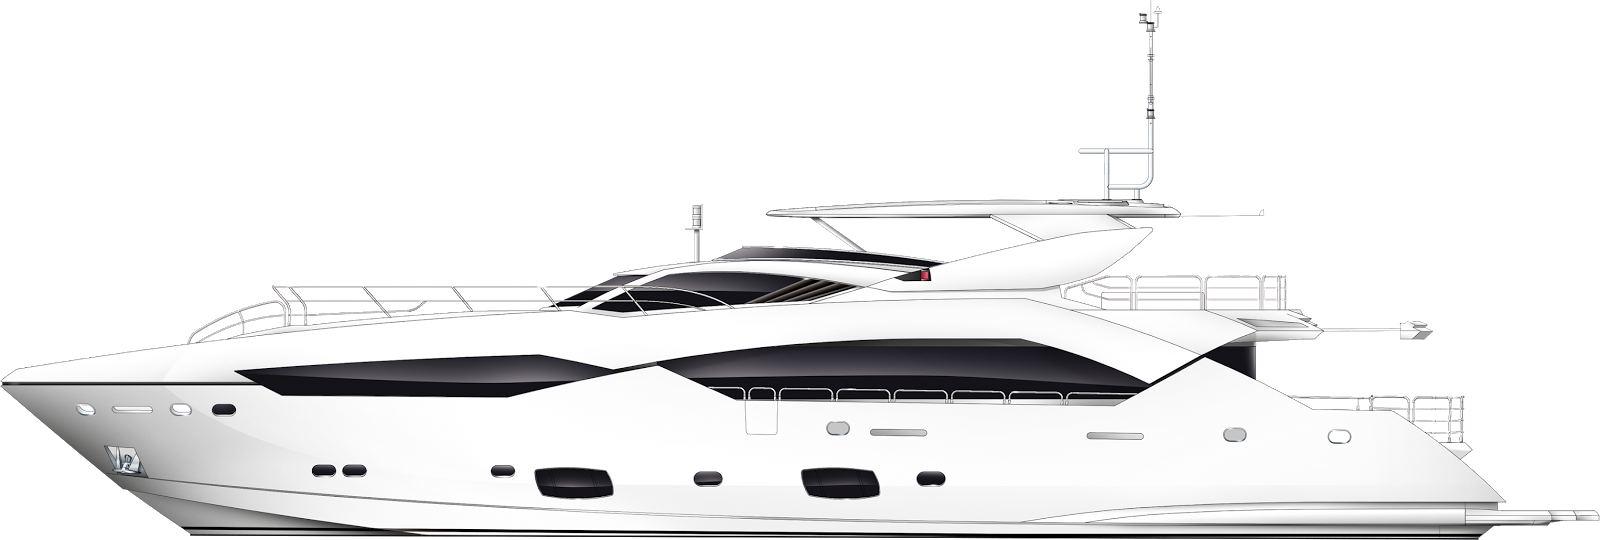 luxury yacht clipart - photo #43